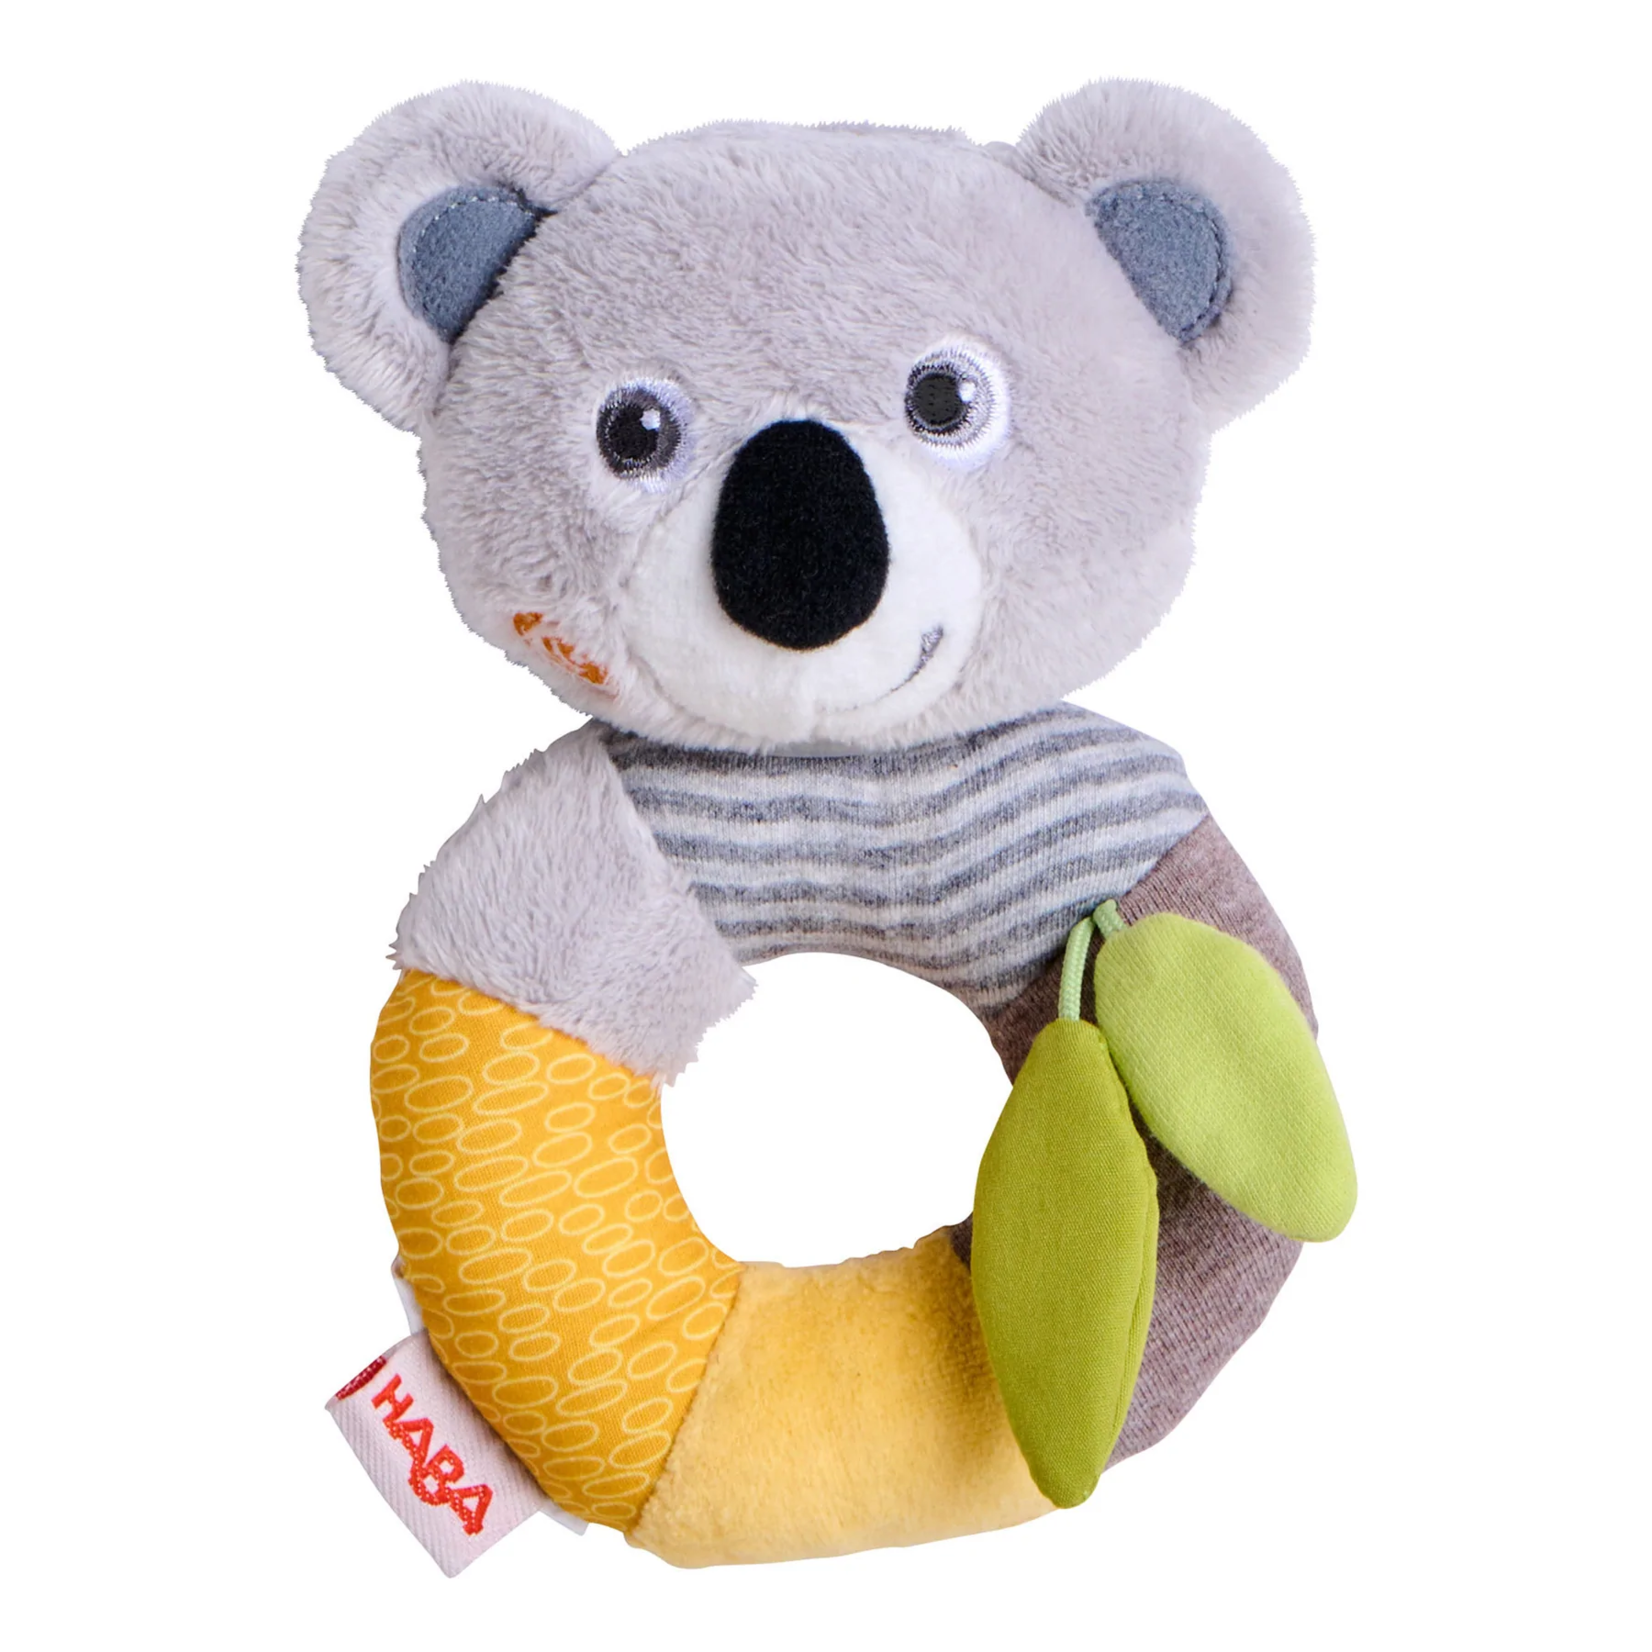 Haba Cuddly Koala Clutching Toy